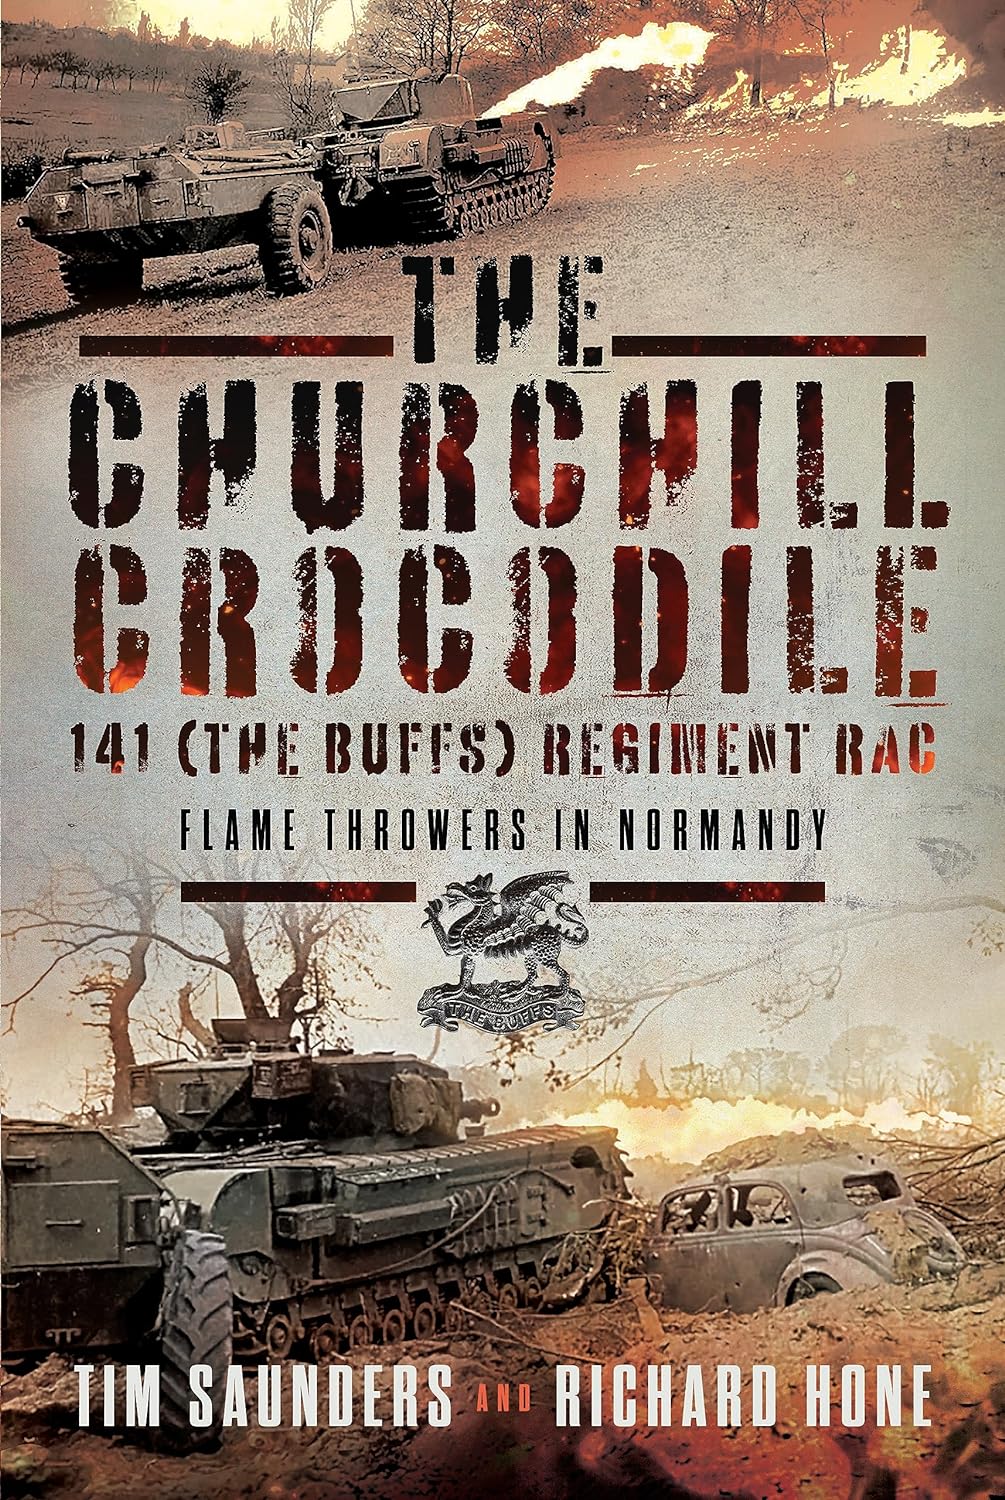 The Churchill Crocodile 141 Regiment RAC (The Buffs)